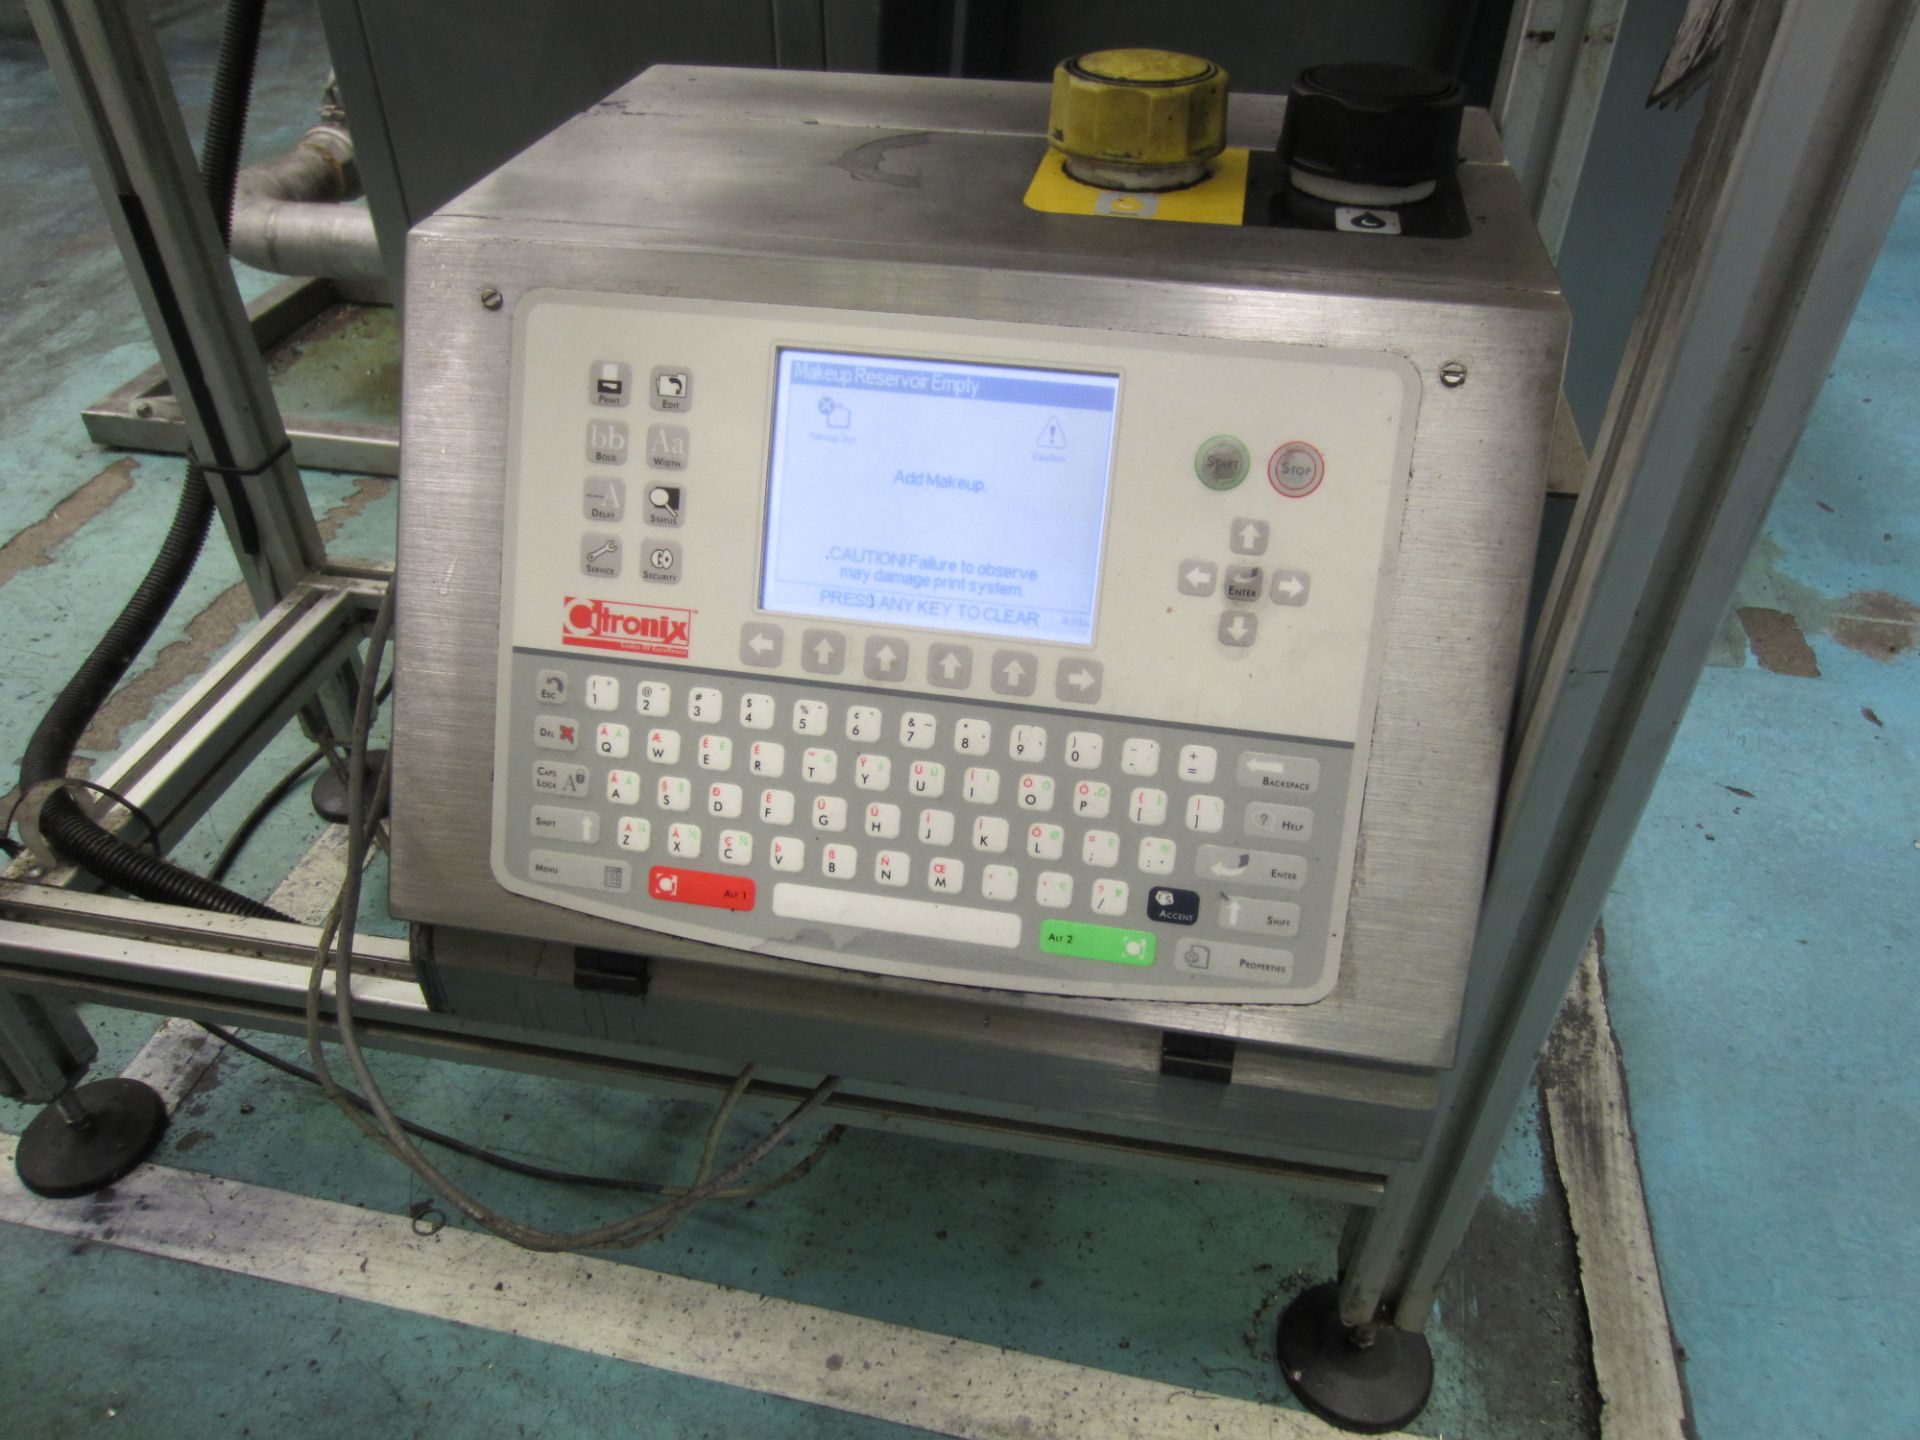 Citronix Model Ci700 Computer Controlled Parts Marking Machine Inkjet Printer, sn:0413052C - Image 3 of 5